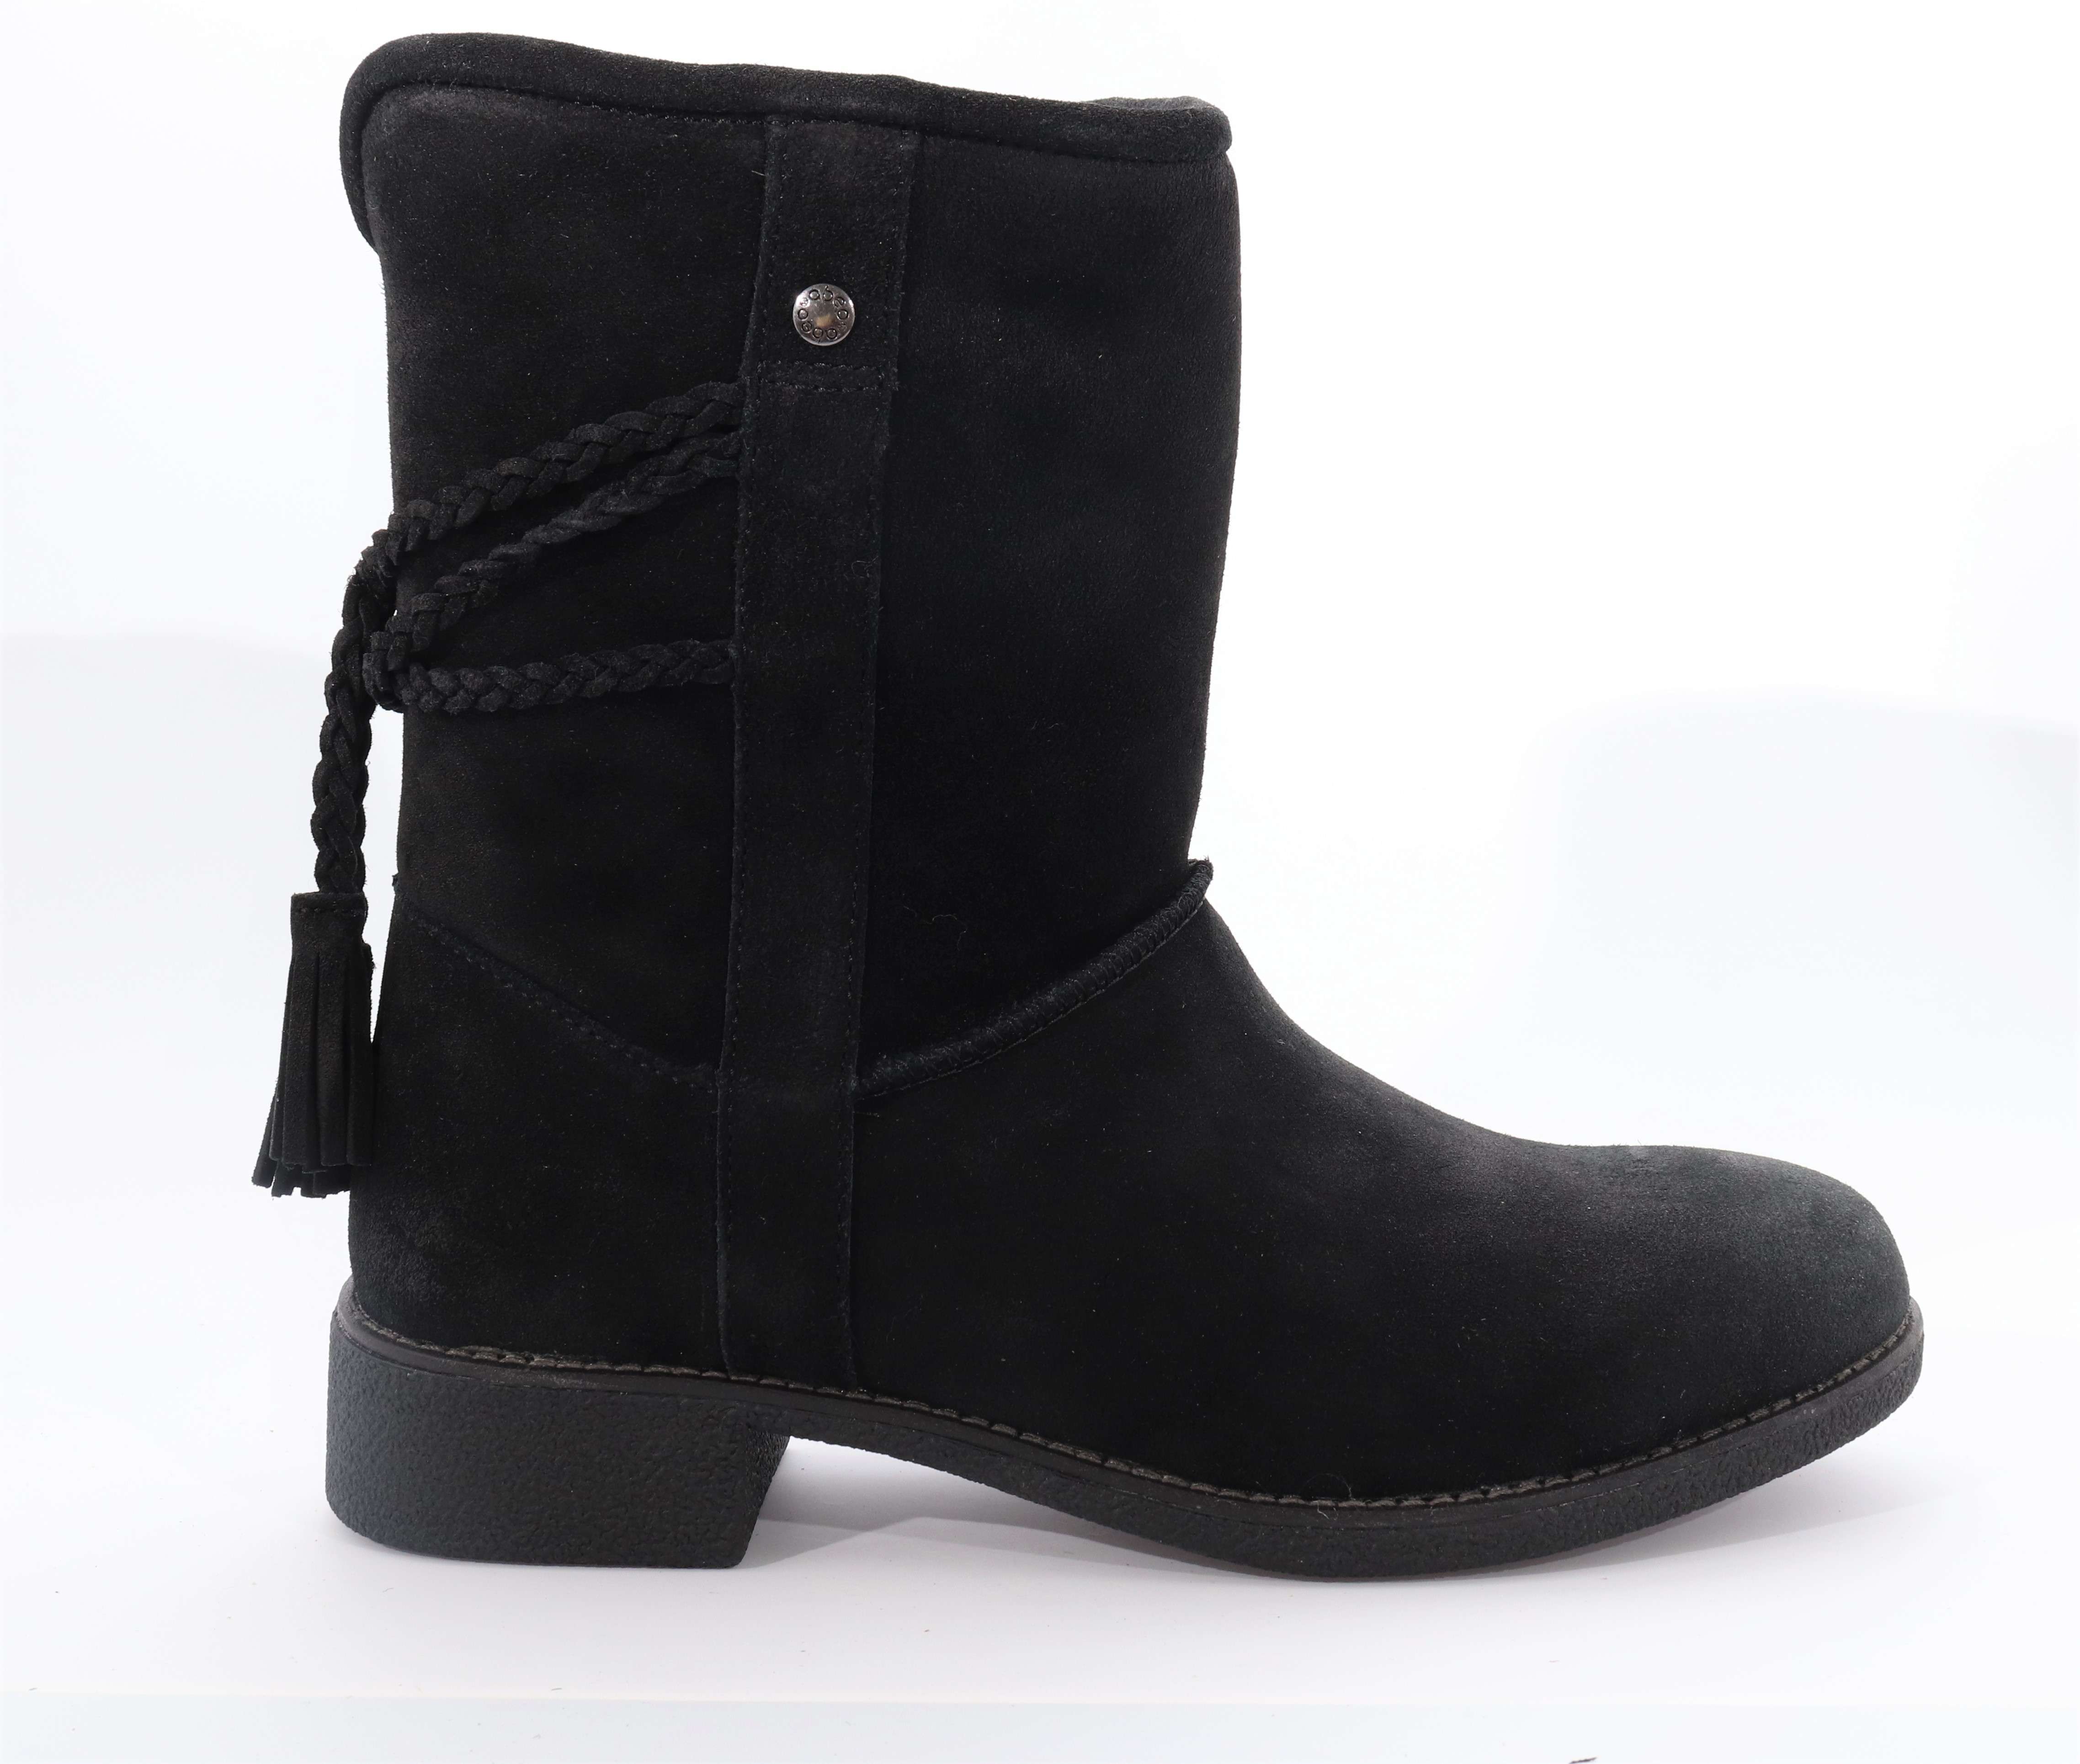 Abeo Pro Blaine Boots Suede Black Women's Size US 8 | eBay